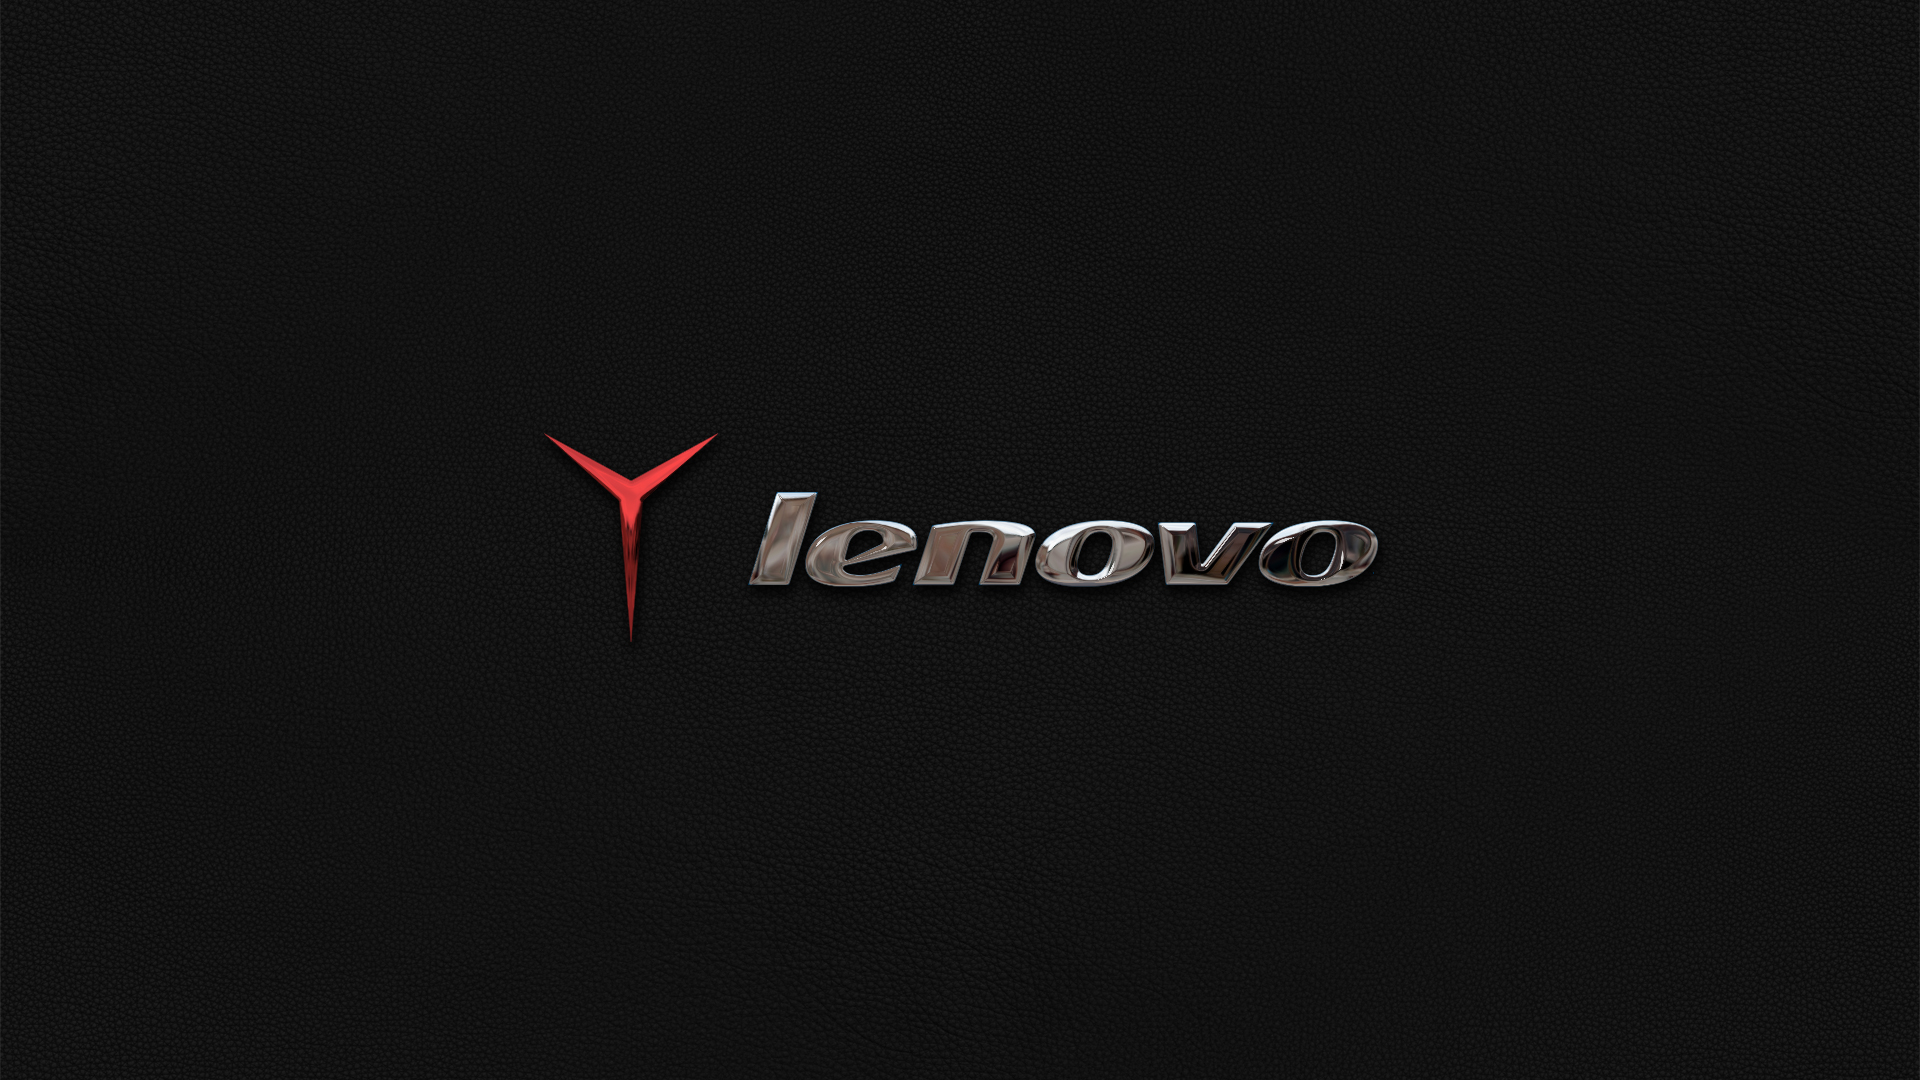 Lenovo-Wallpaper by Stickcorporation on DeviantArt